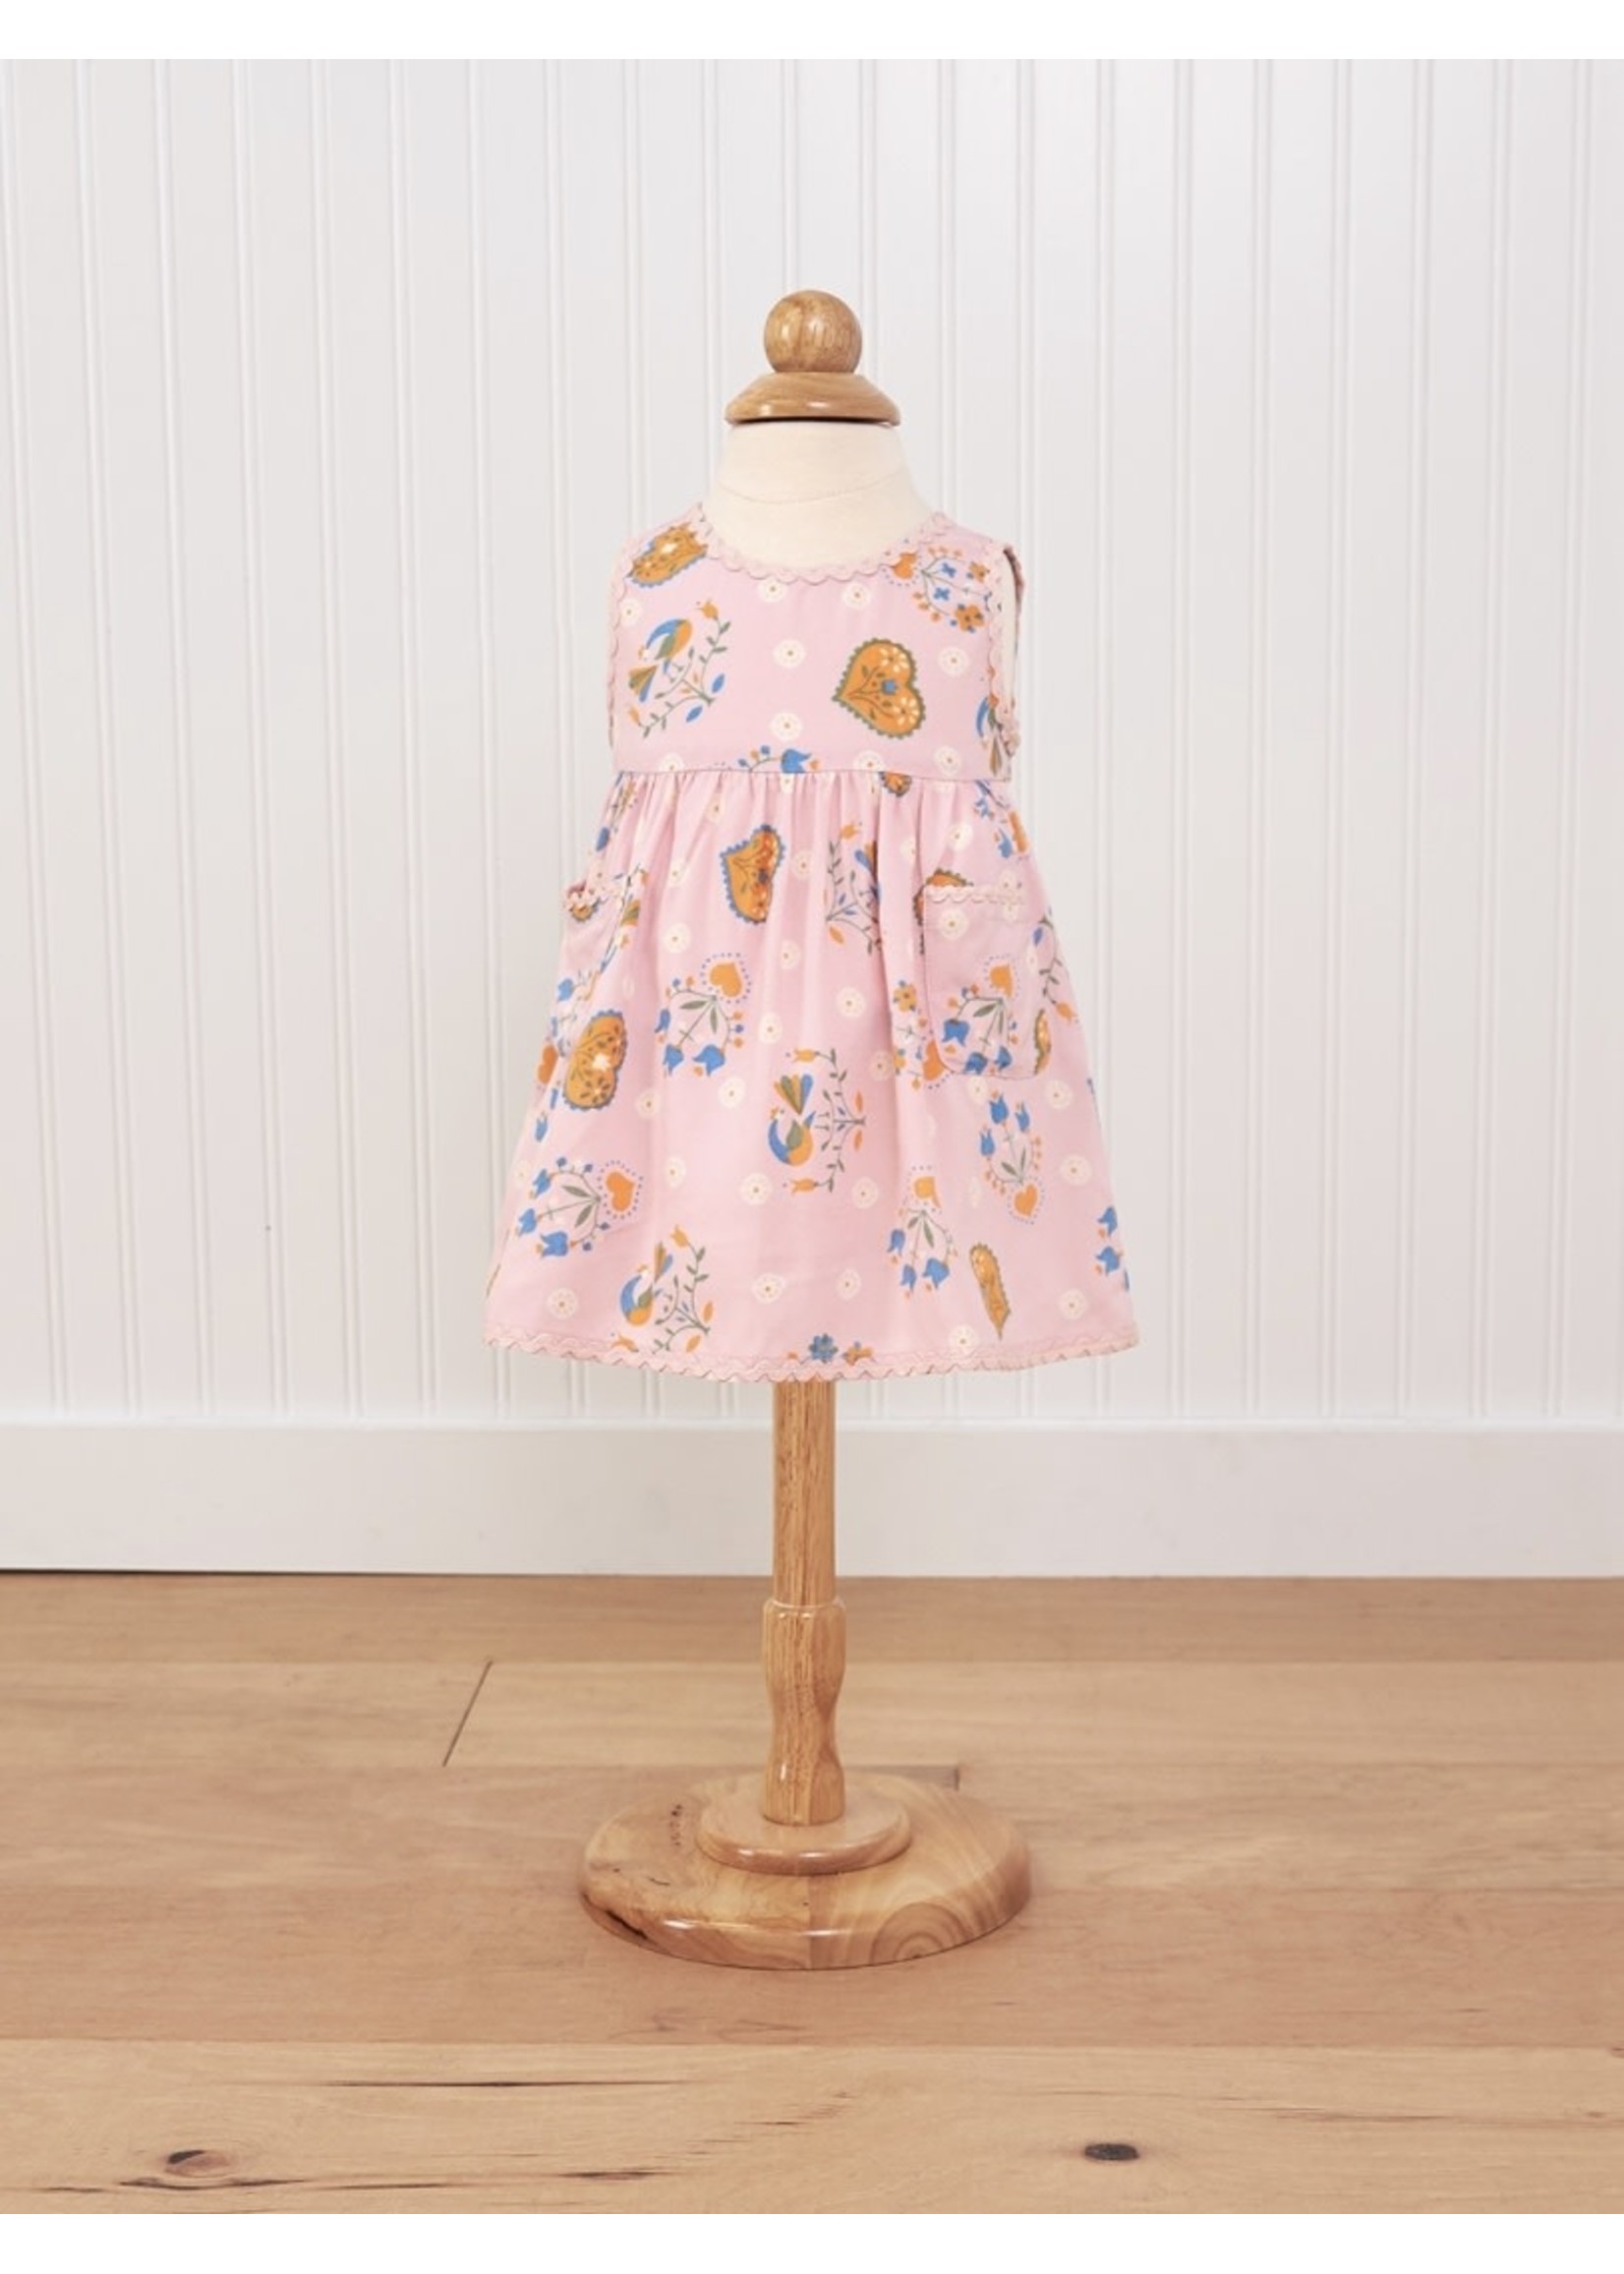 April Cornell Folklore Baby Dress